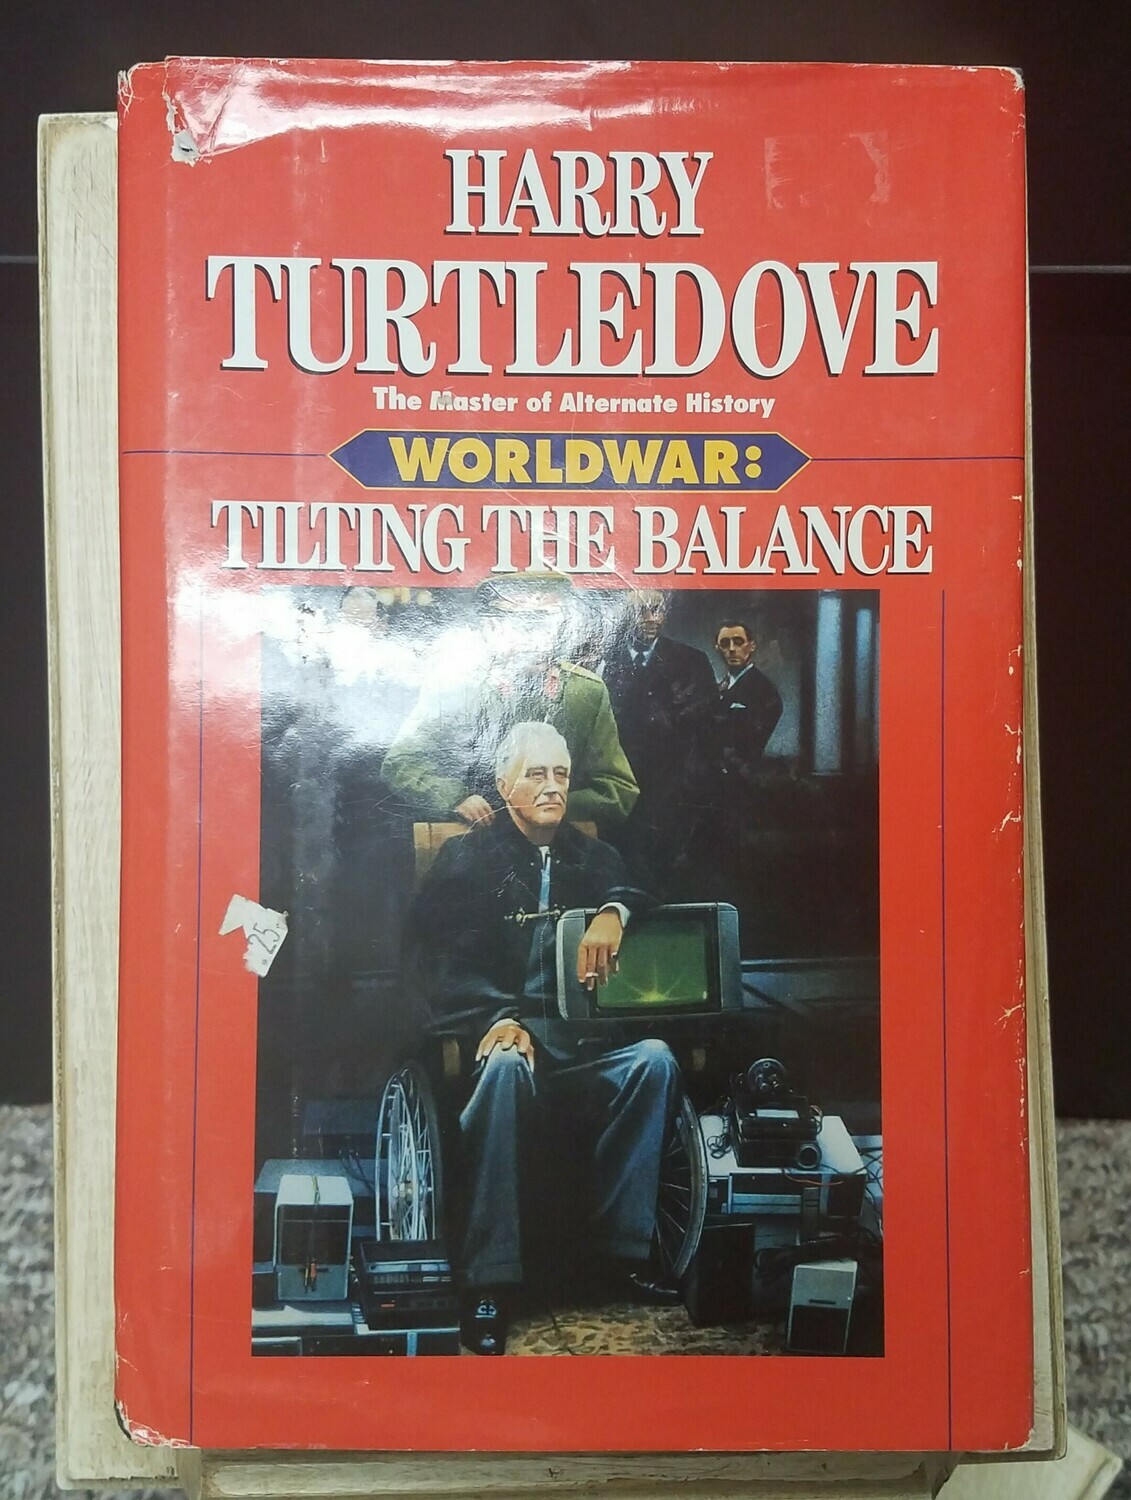 Worldwar: Tilting the Balance by Harry Turtledove